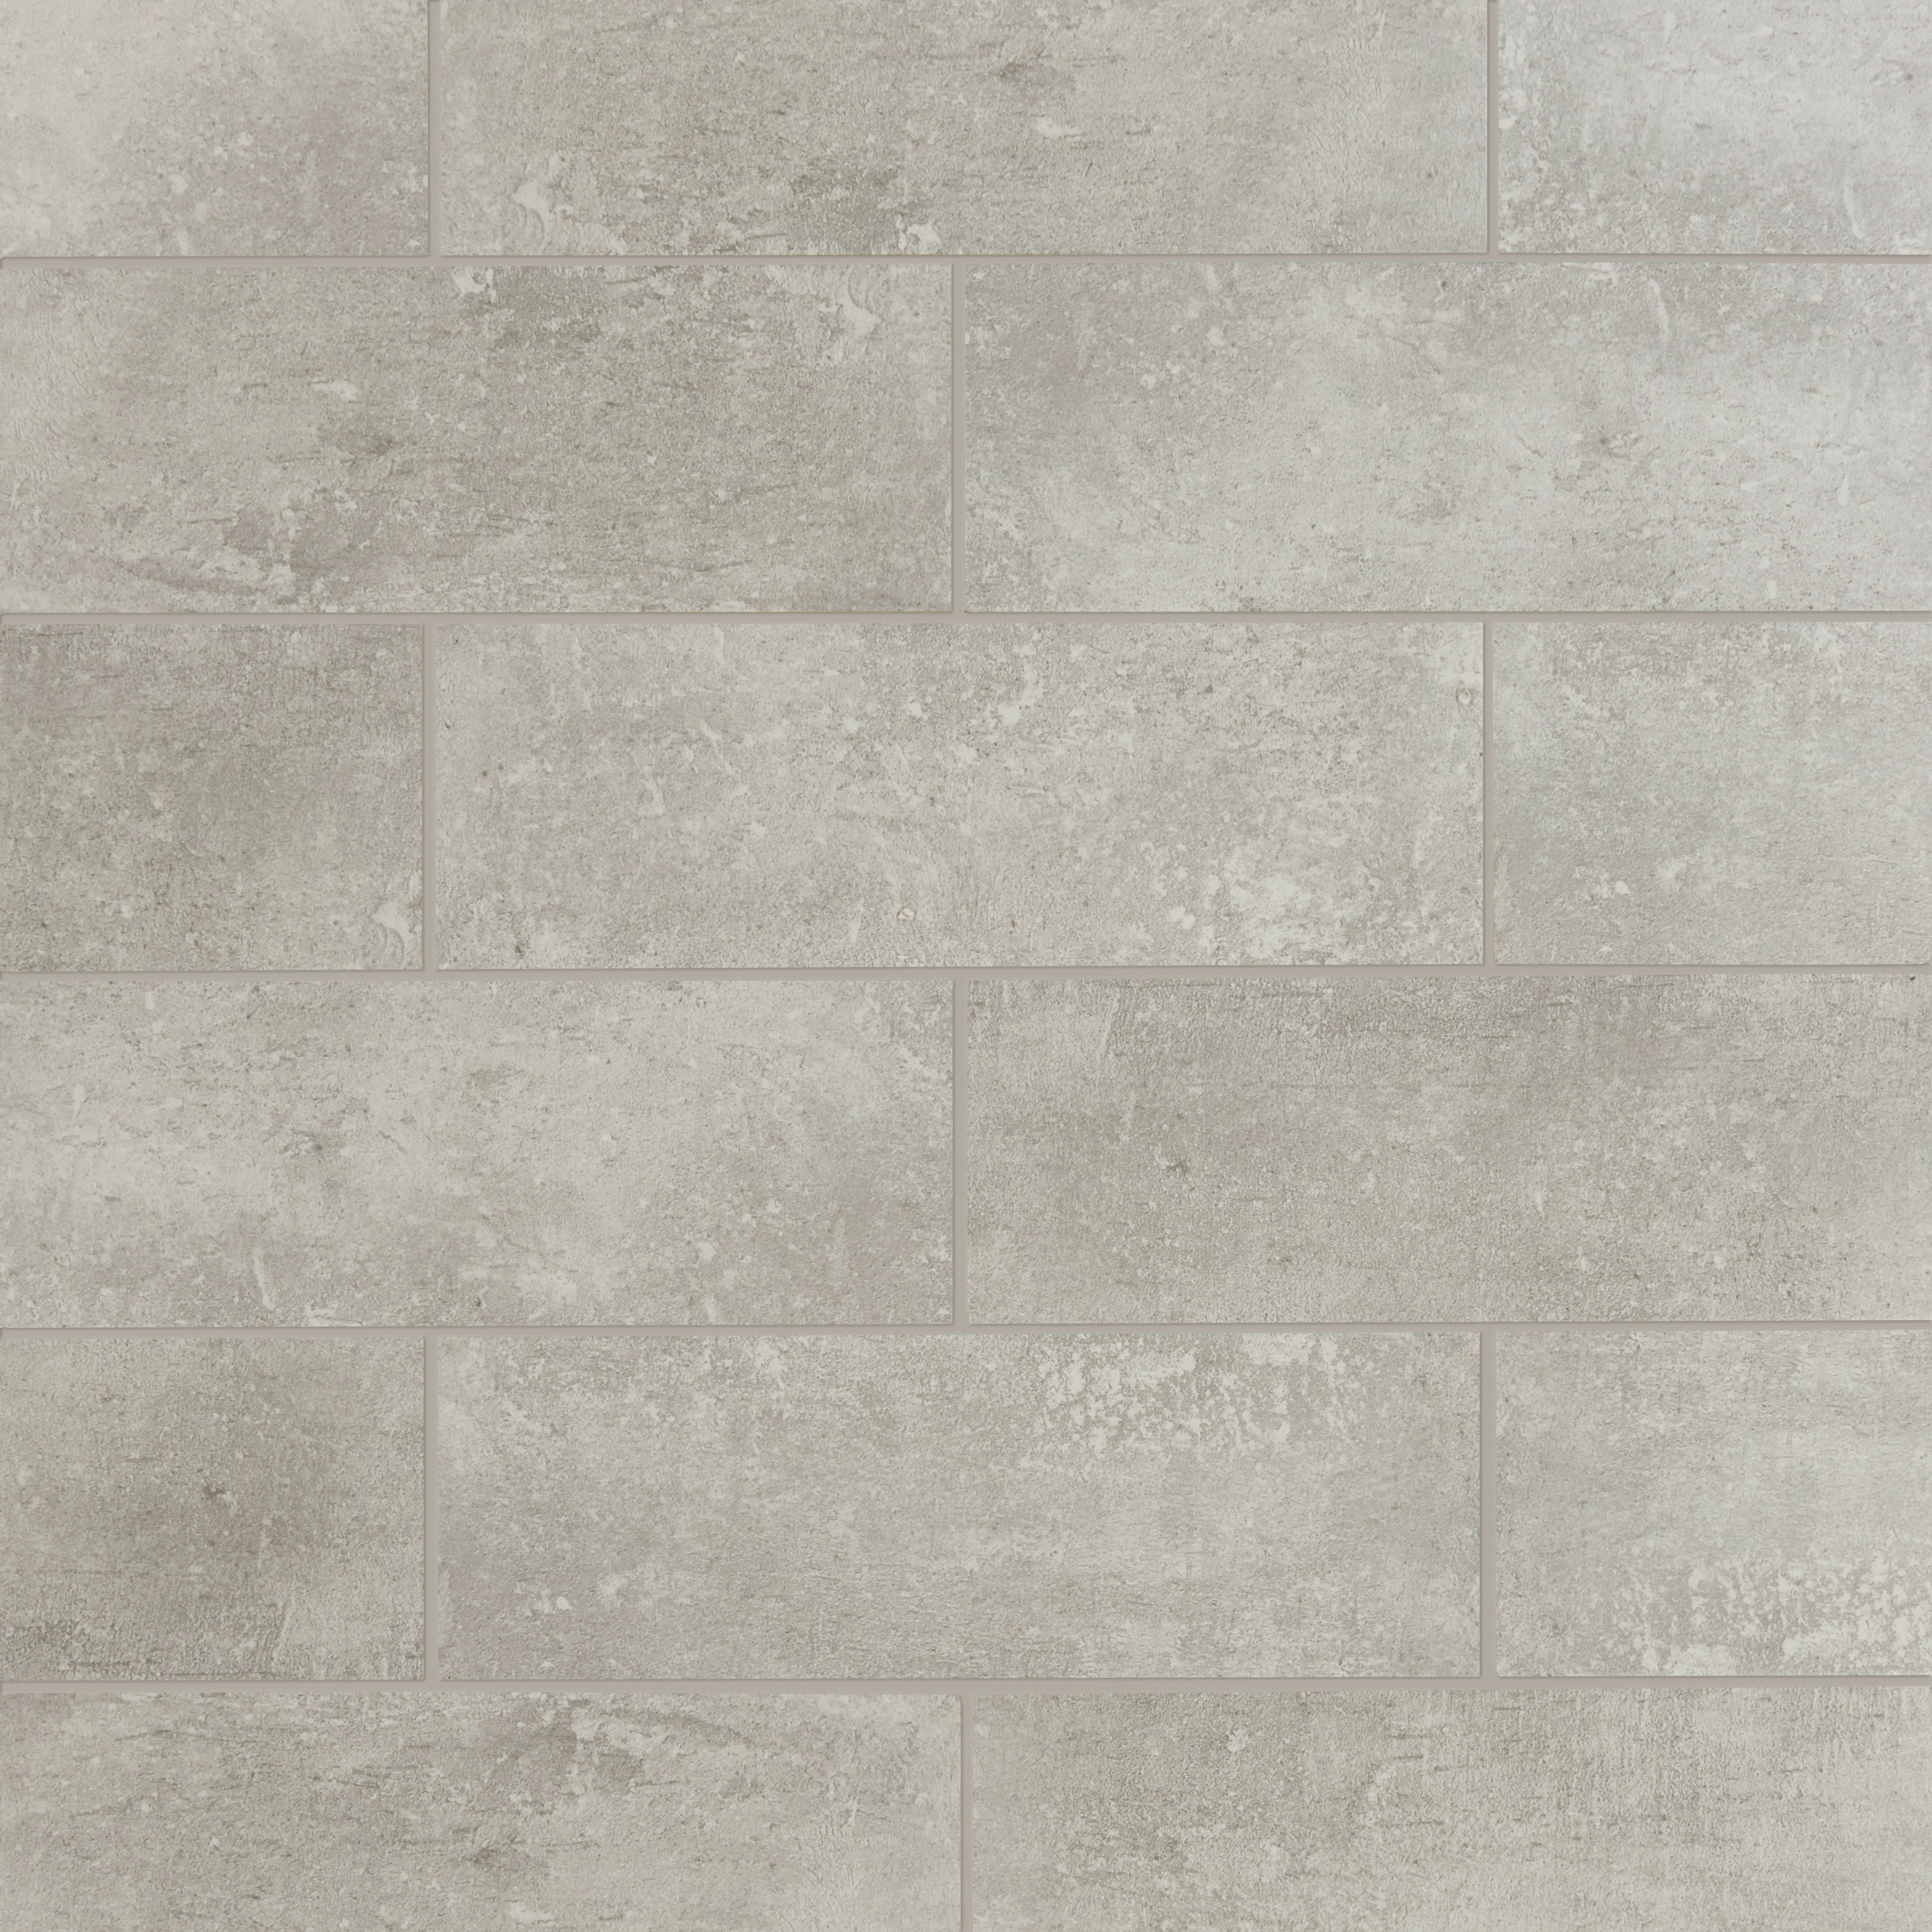 Metal ID Light grey Matt Flat Concrete effect Ceramic Indoor Wall Tile, Pack of 8, (L)600mm (W)200mm